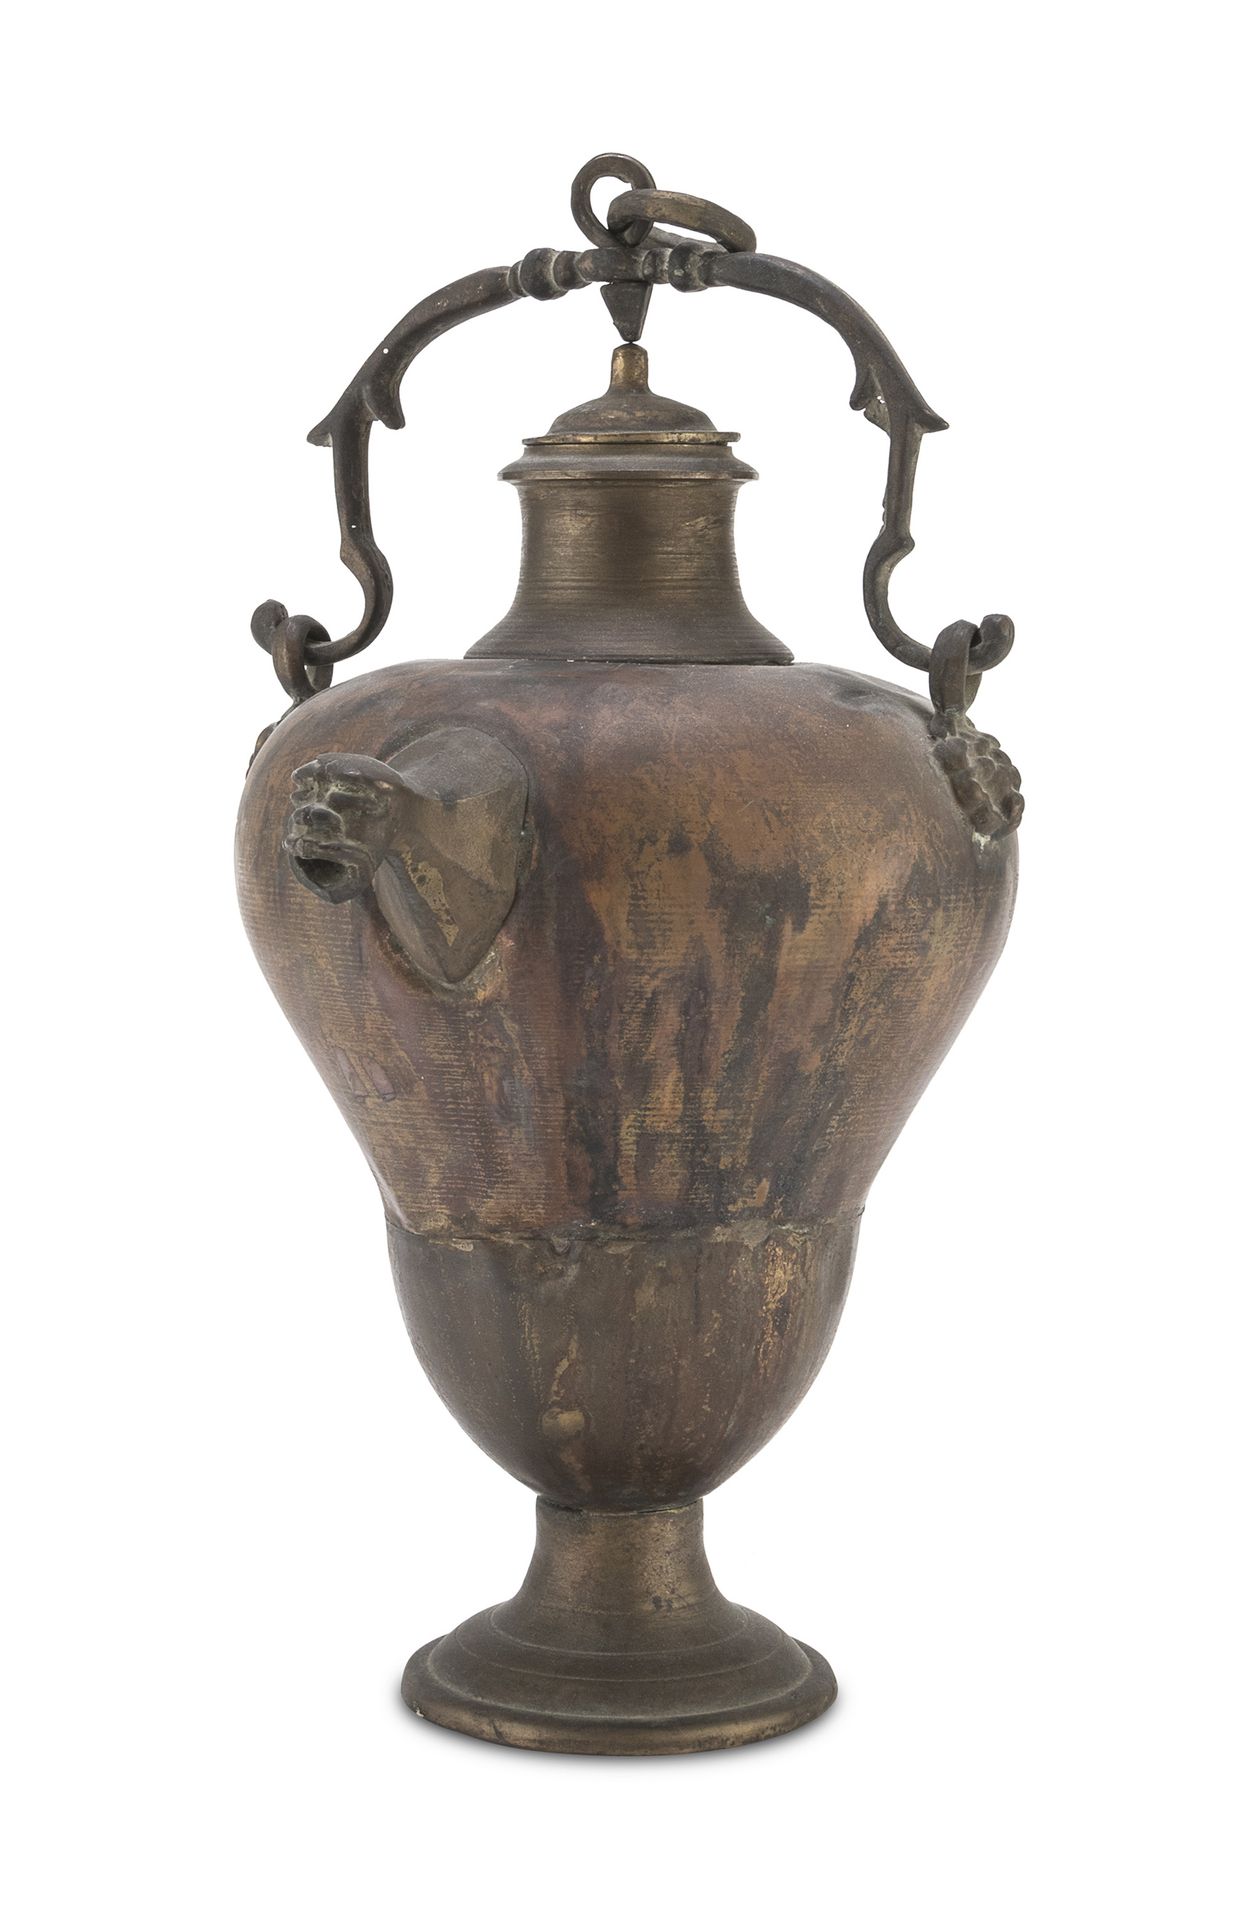 Null 铜壶，意大利中部 十九世纪

椭圆形壶身，青铜手柄和壶嘴，形状为一个拟人化的头。

尺寸为33 x 28 x 20厘米。

缺陷。